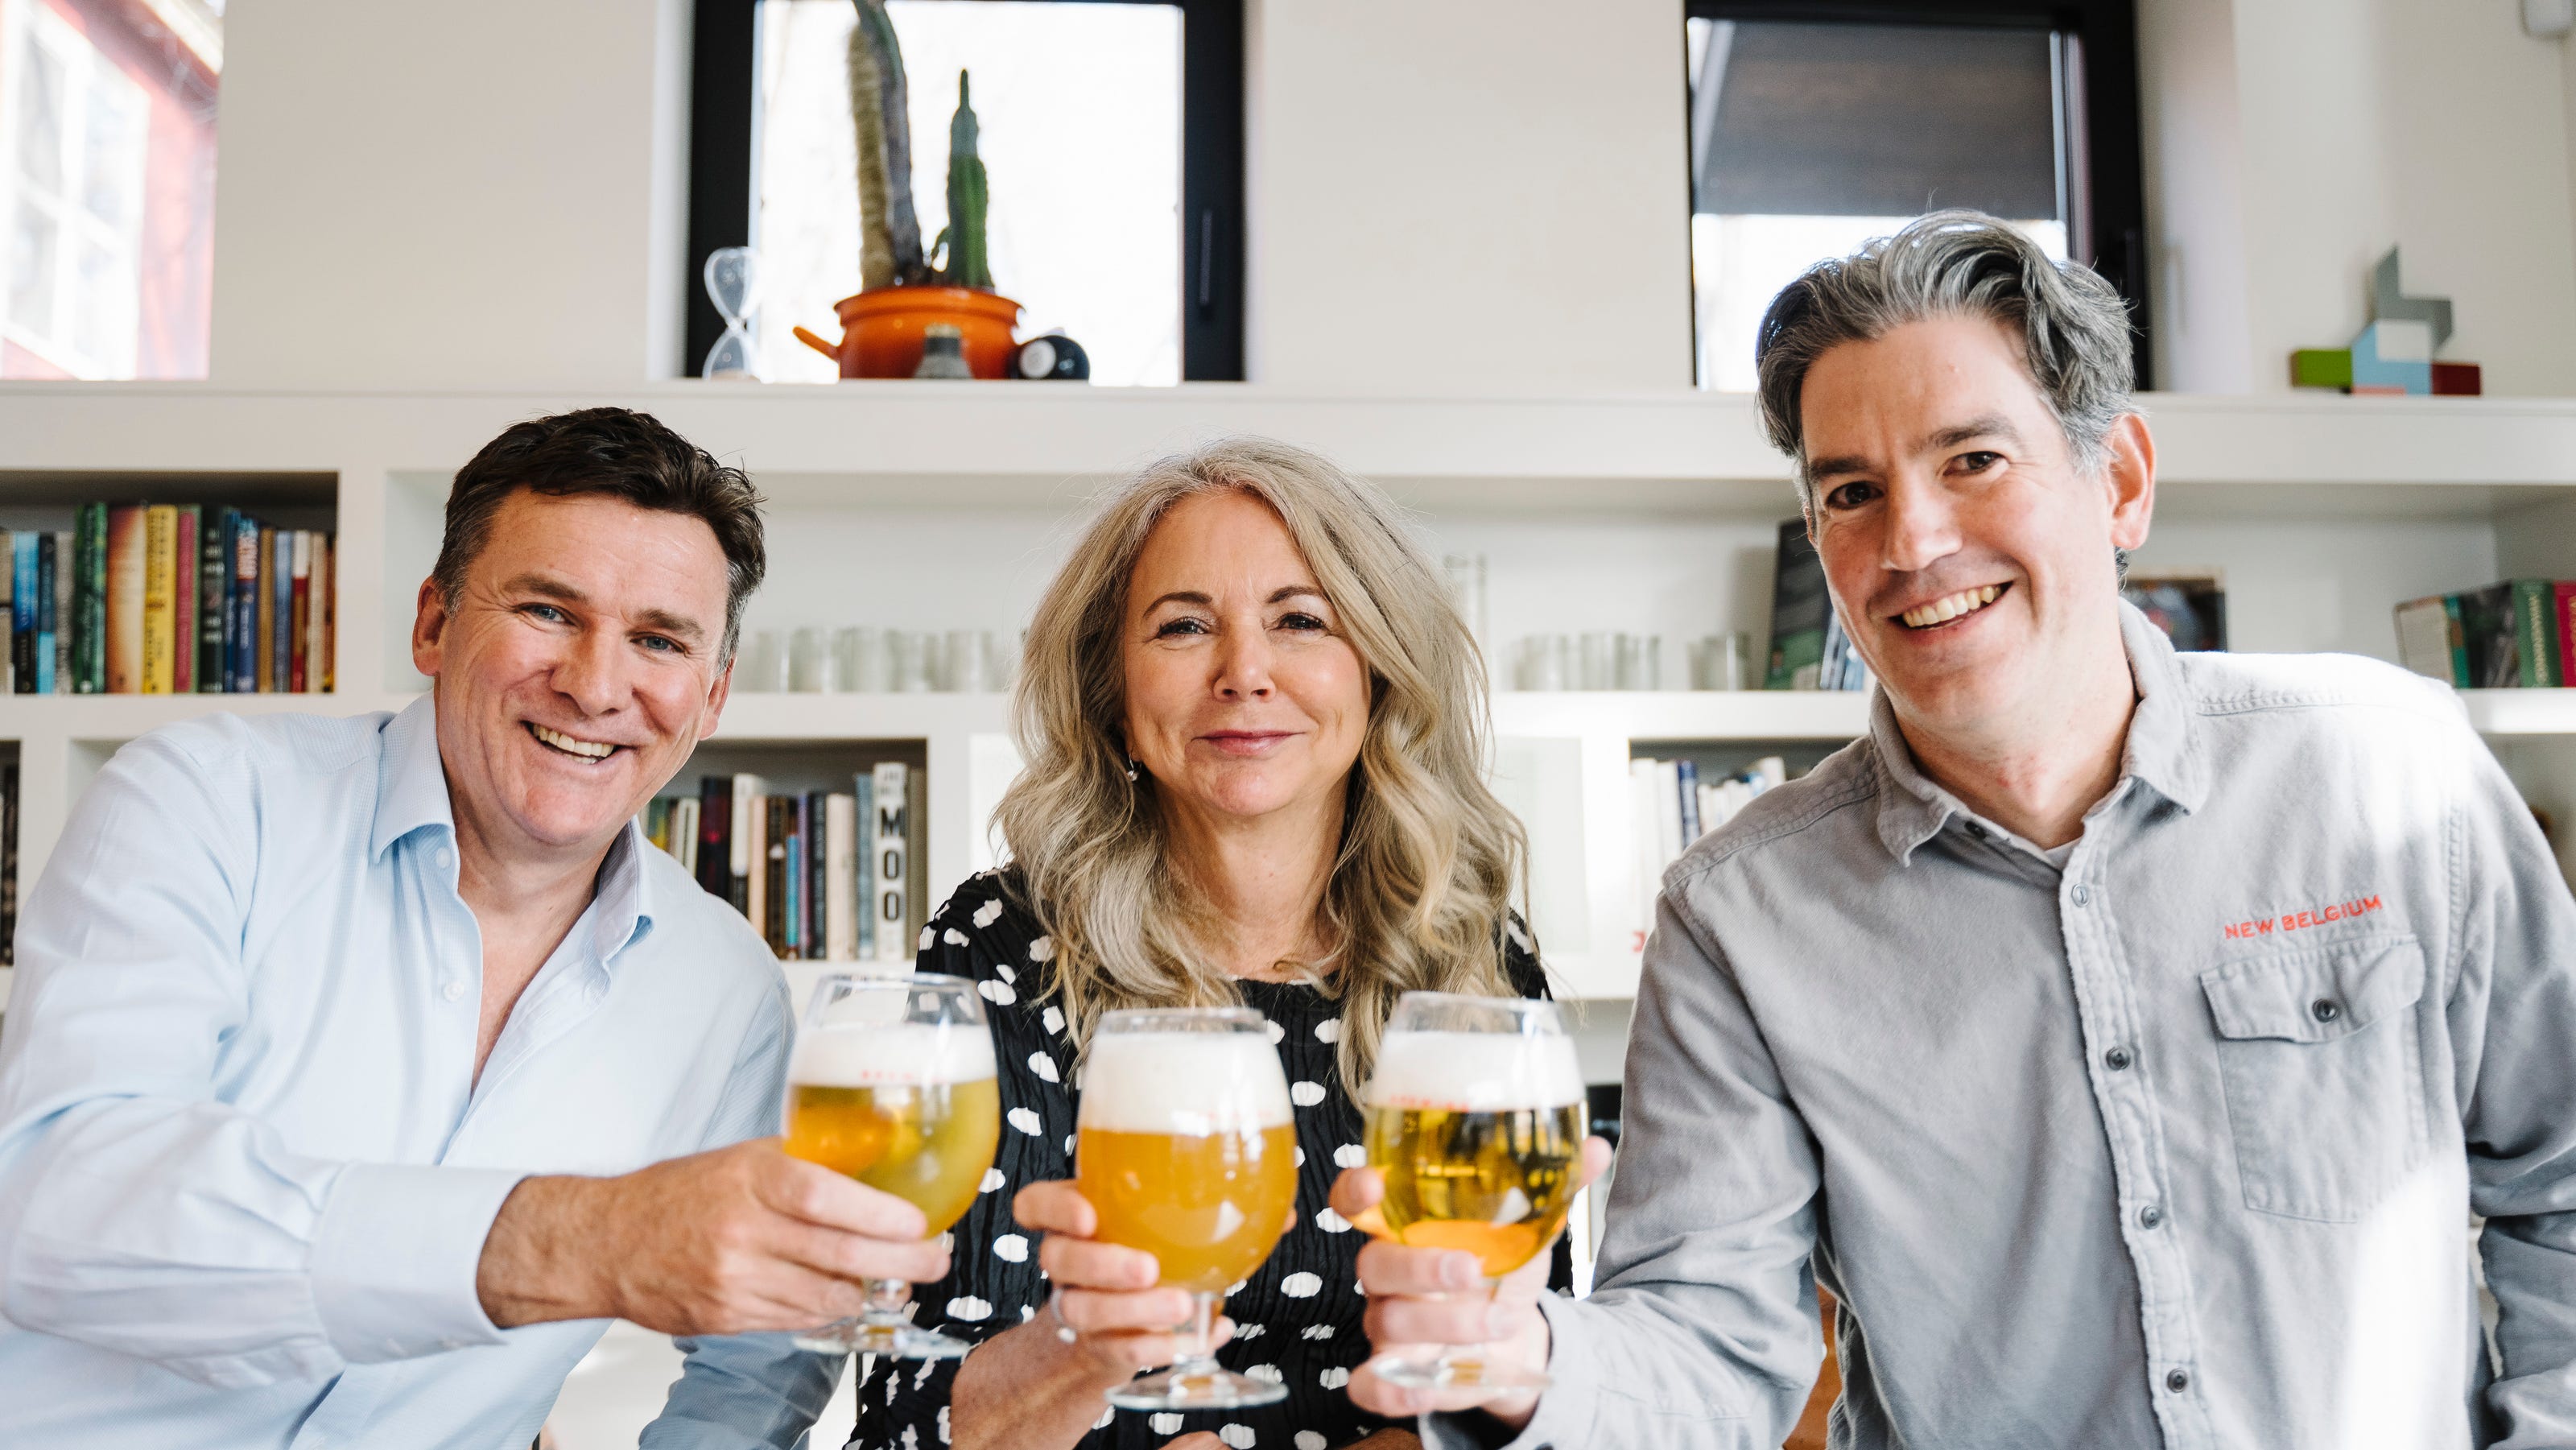 New Brewing sale: Founder Kim Jordan's to beer